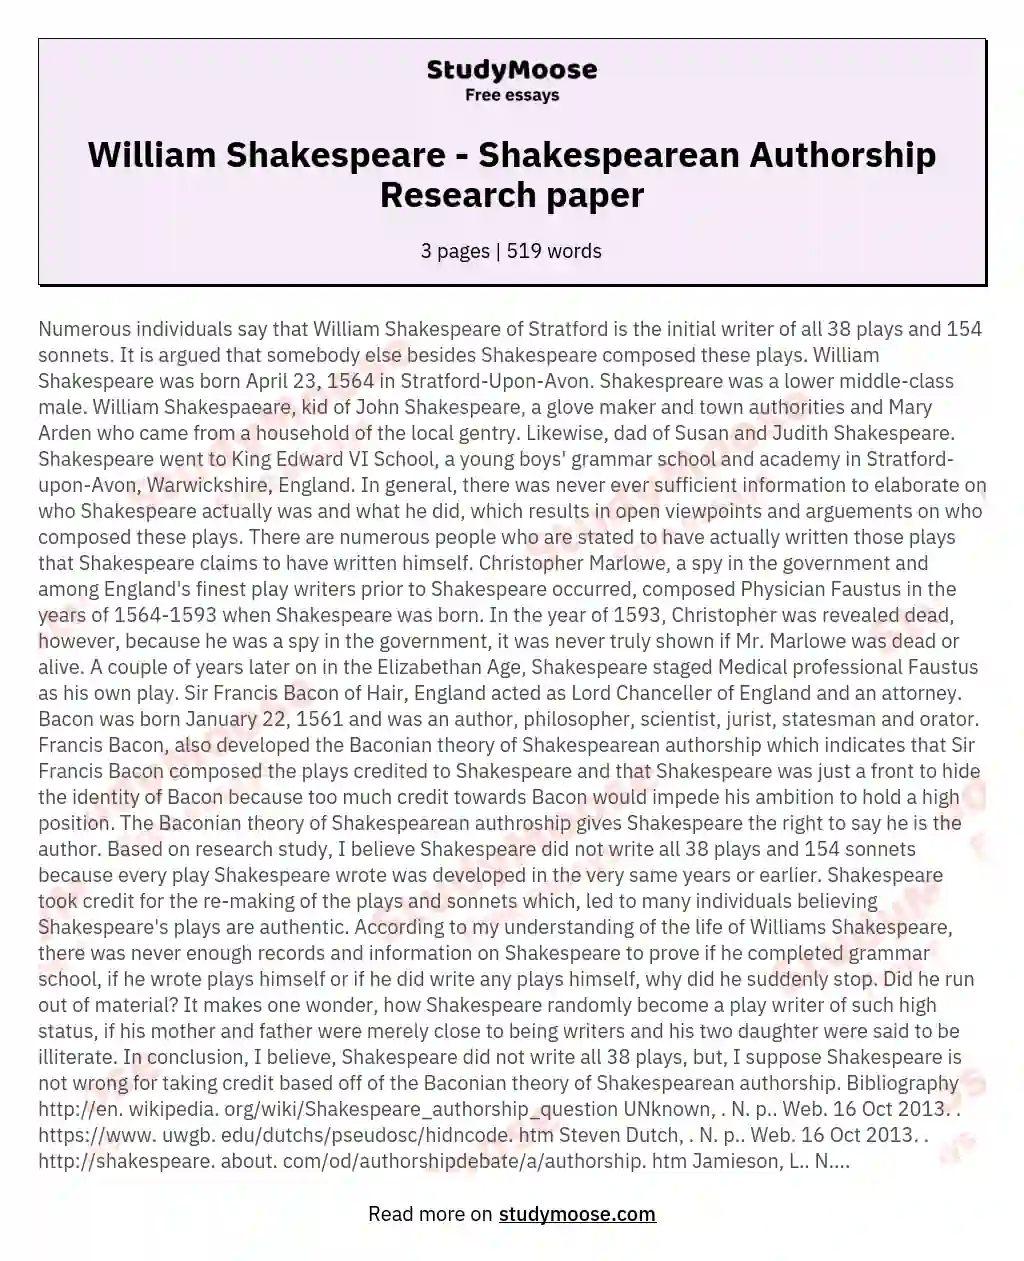 William Shakespeare - Shakespearean Authorship Research paper essay